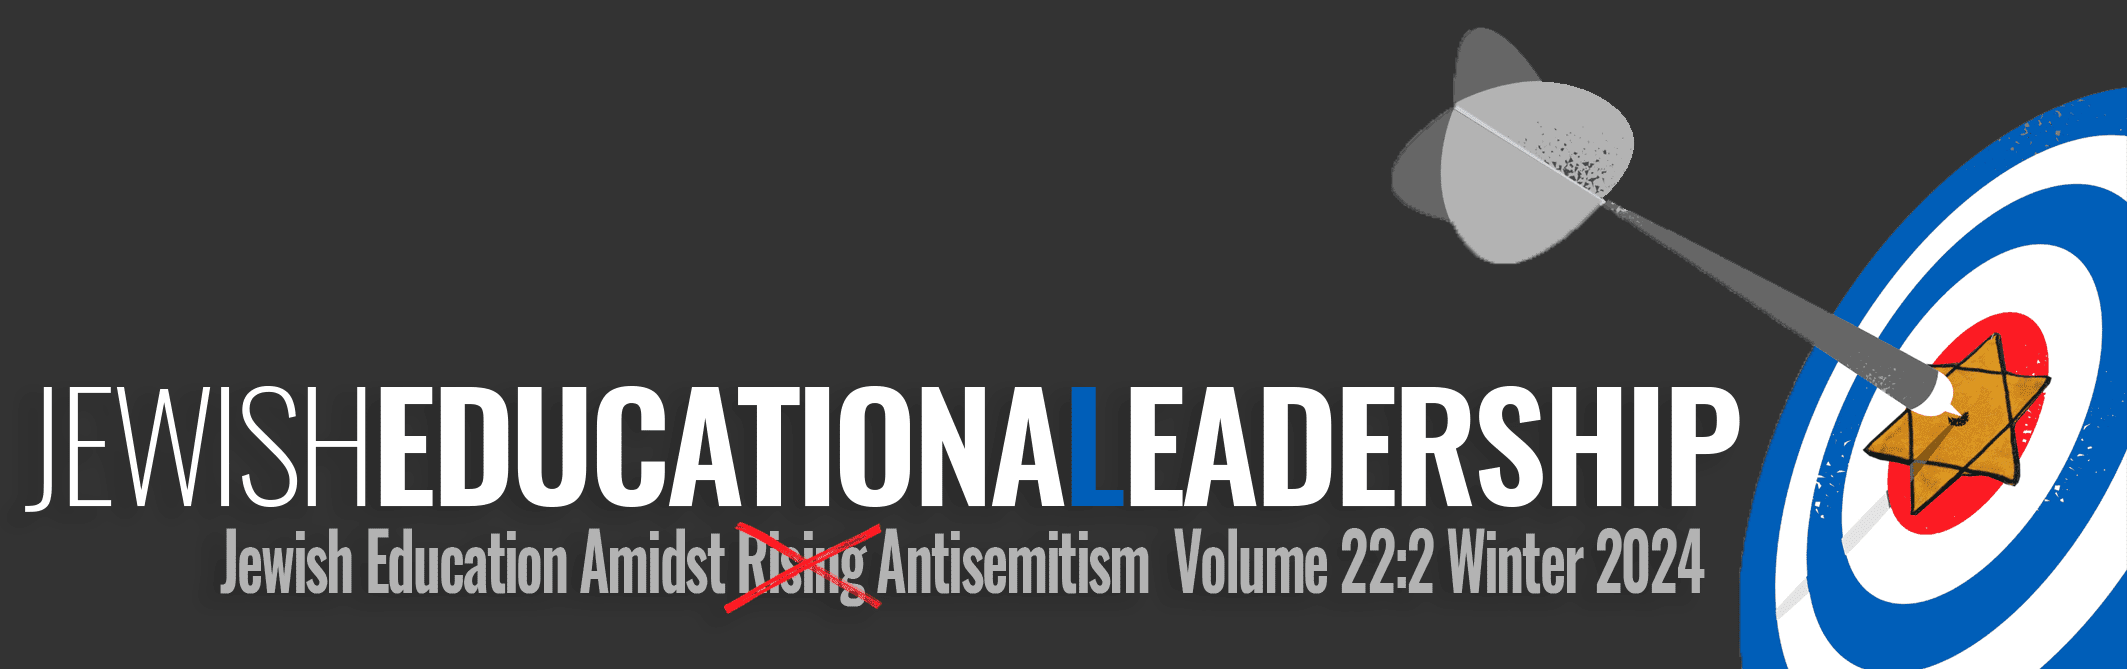 Jewish Educational Leadership | Volume 22:2 Winter 2023 | Jewish Education Amidst Rising Antisemitism